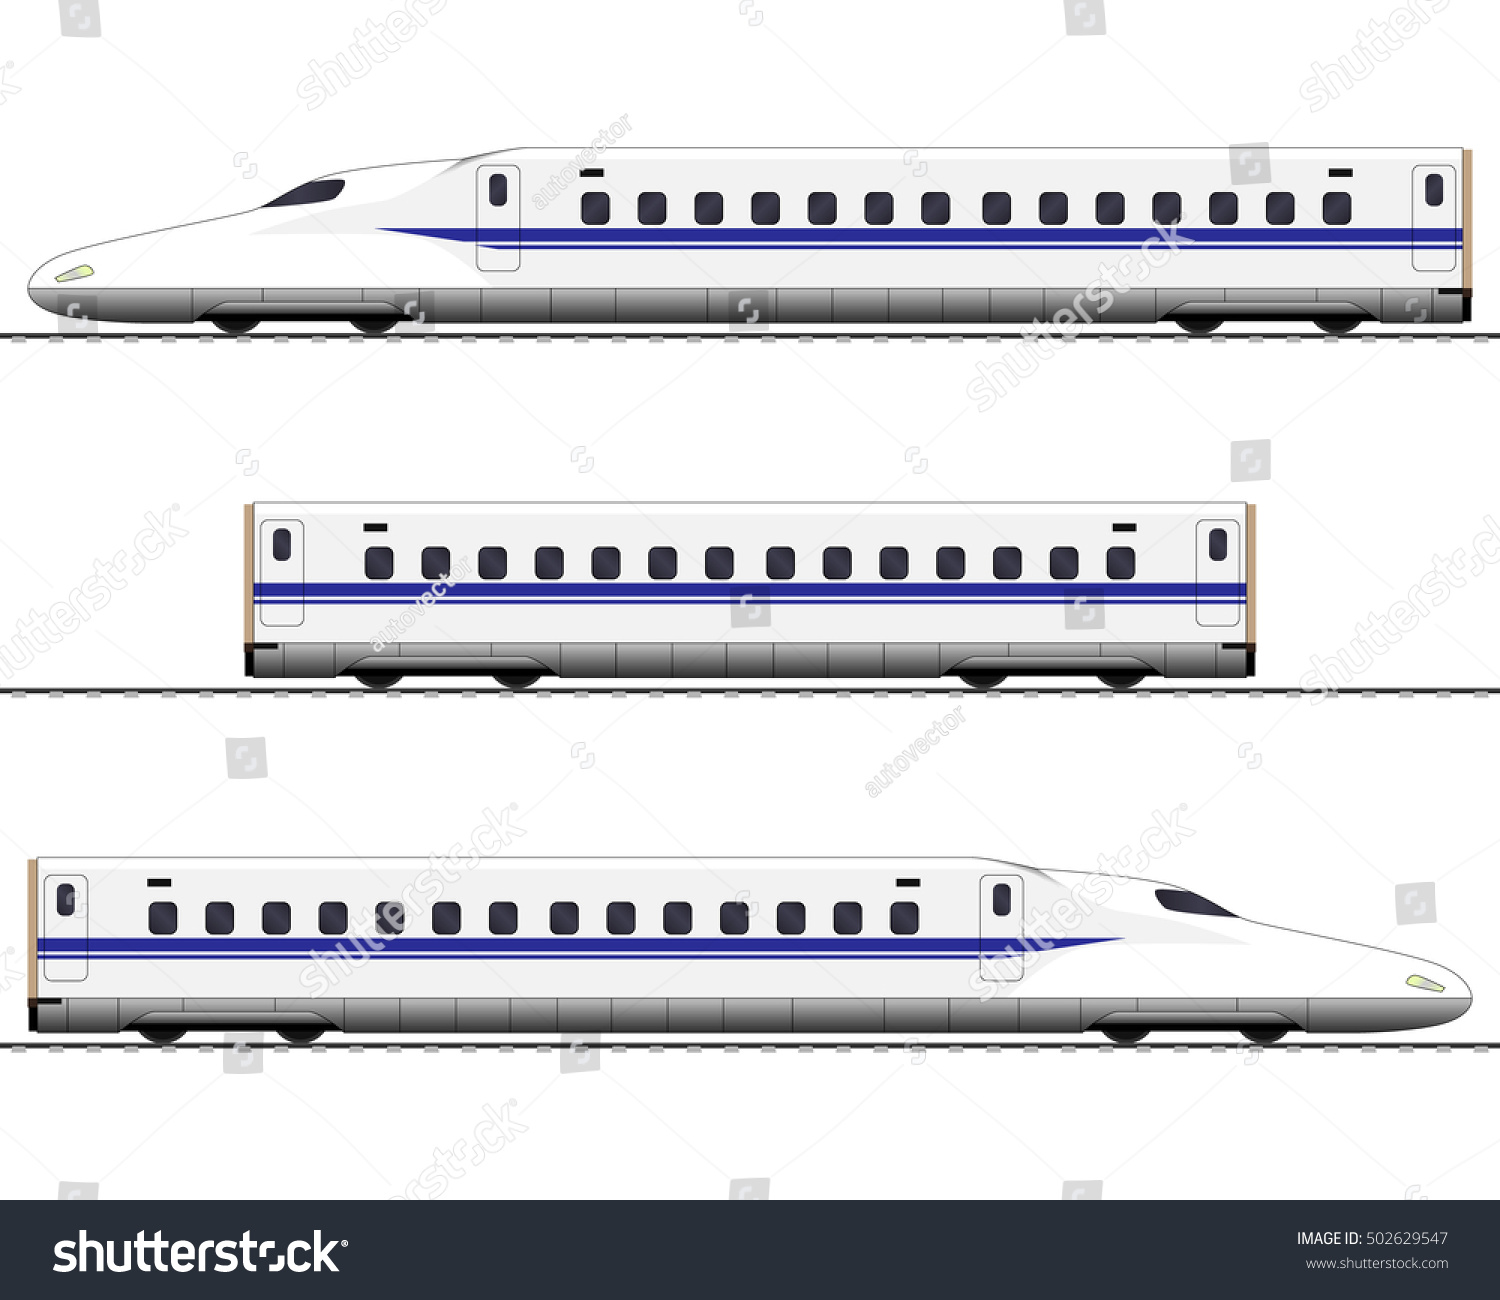 2,484 Bullet train illustration Images, Stock Photos & Vectors ...